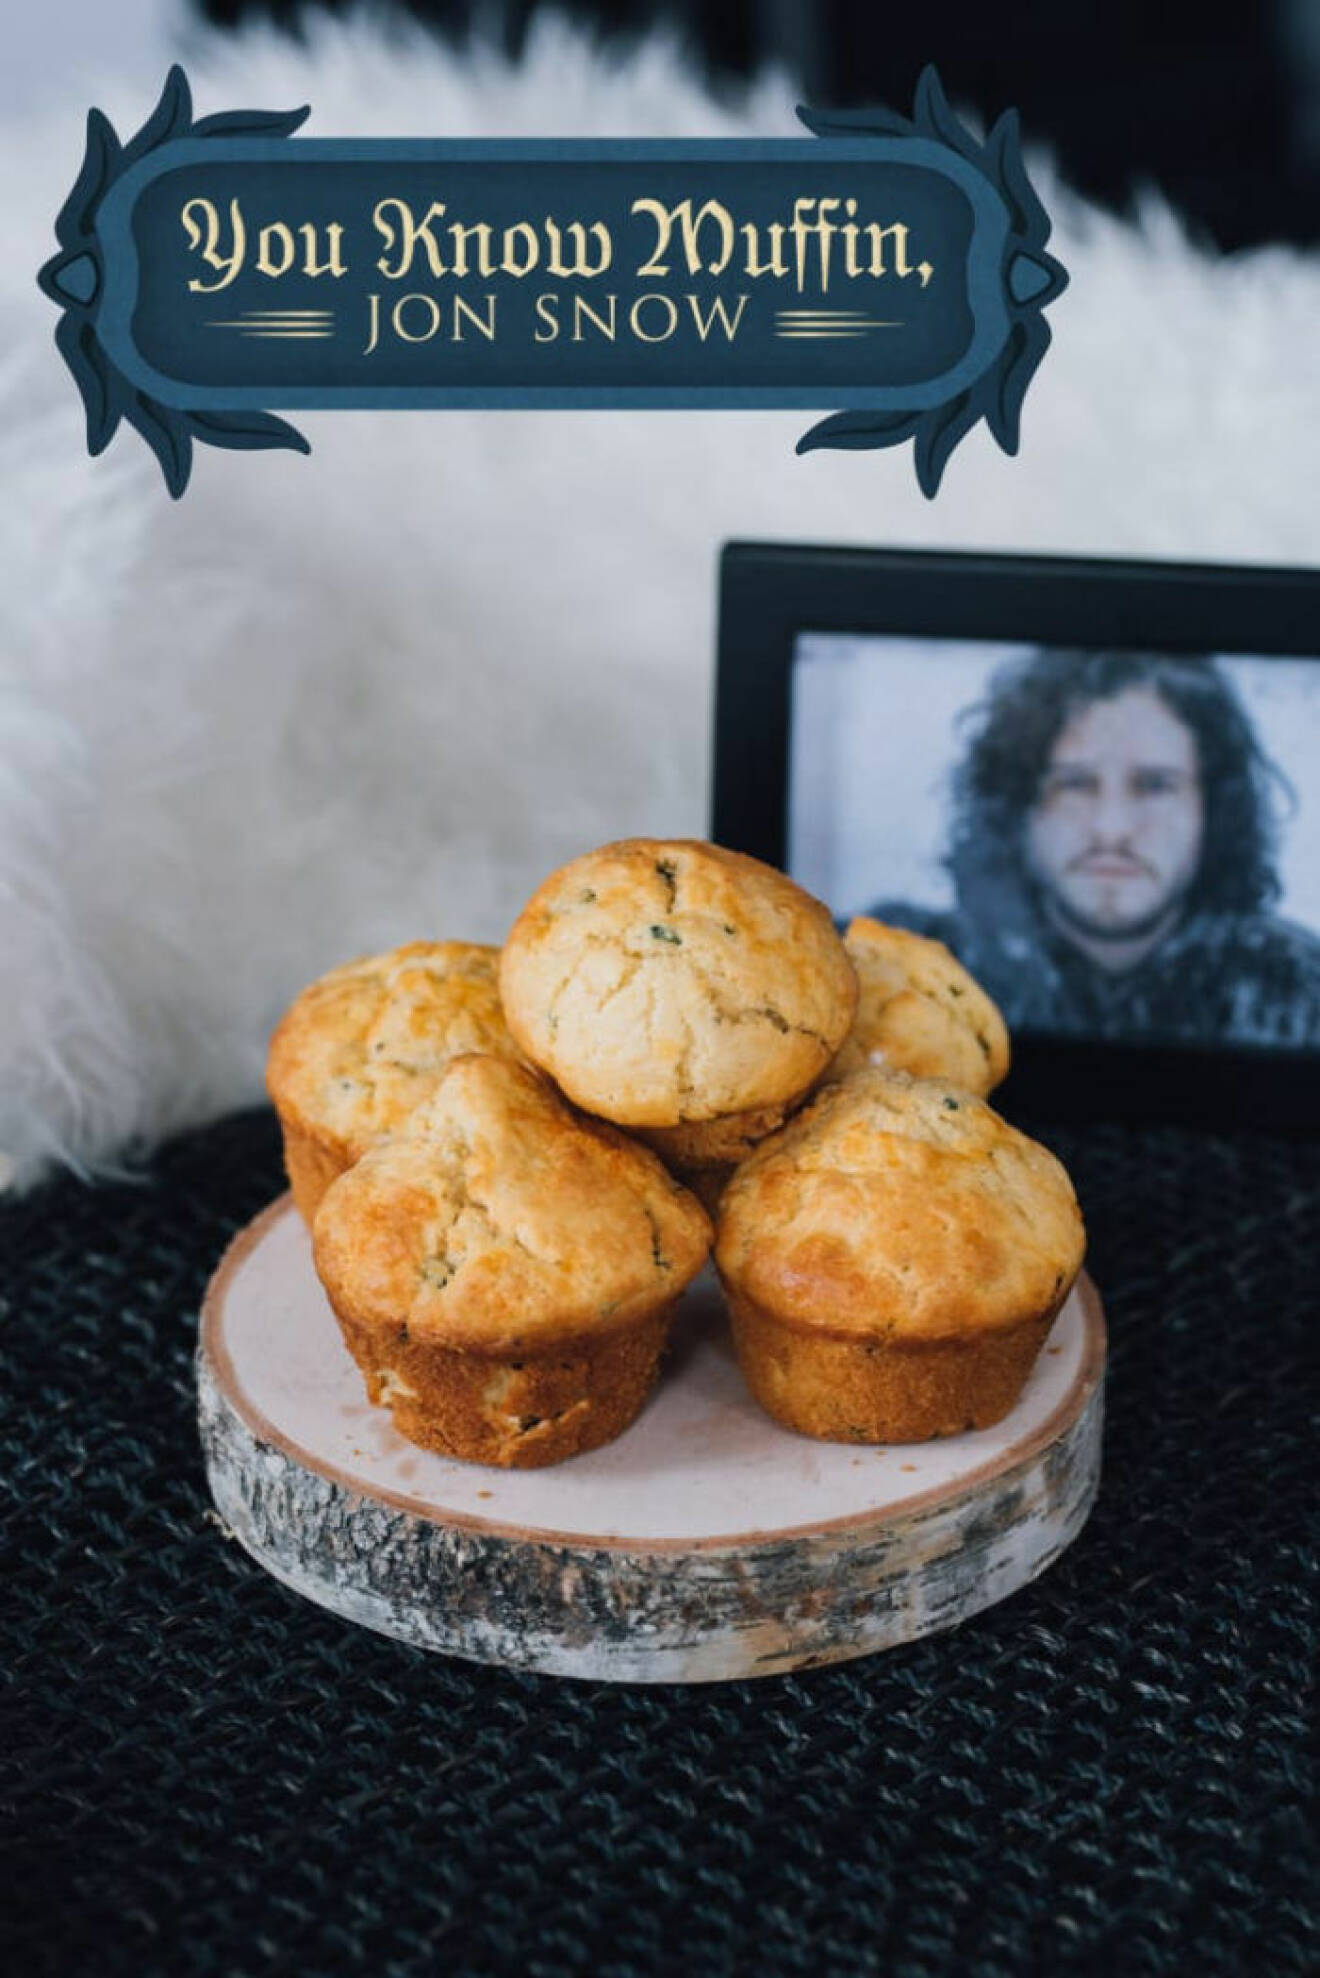 You know muffin, Jon Snow.